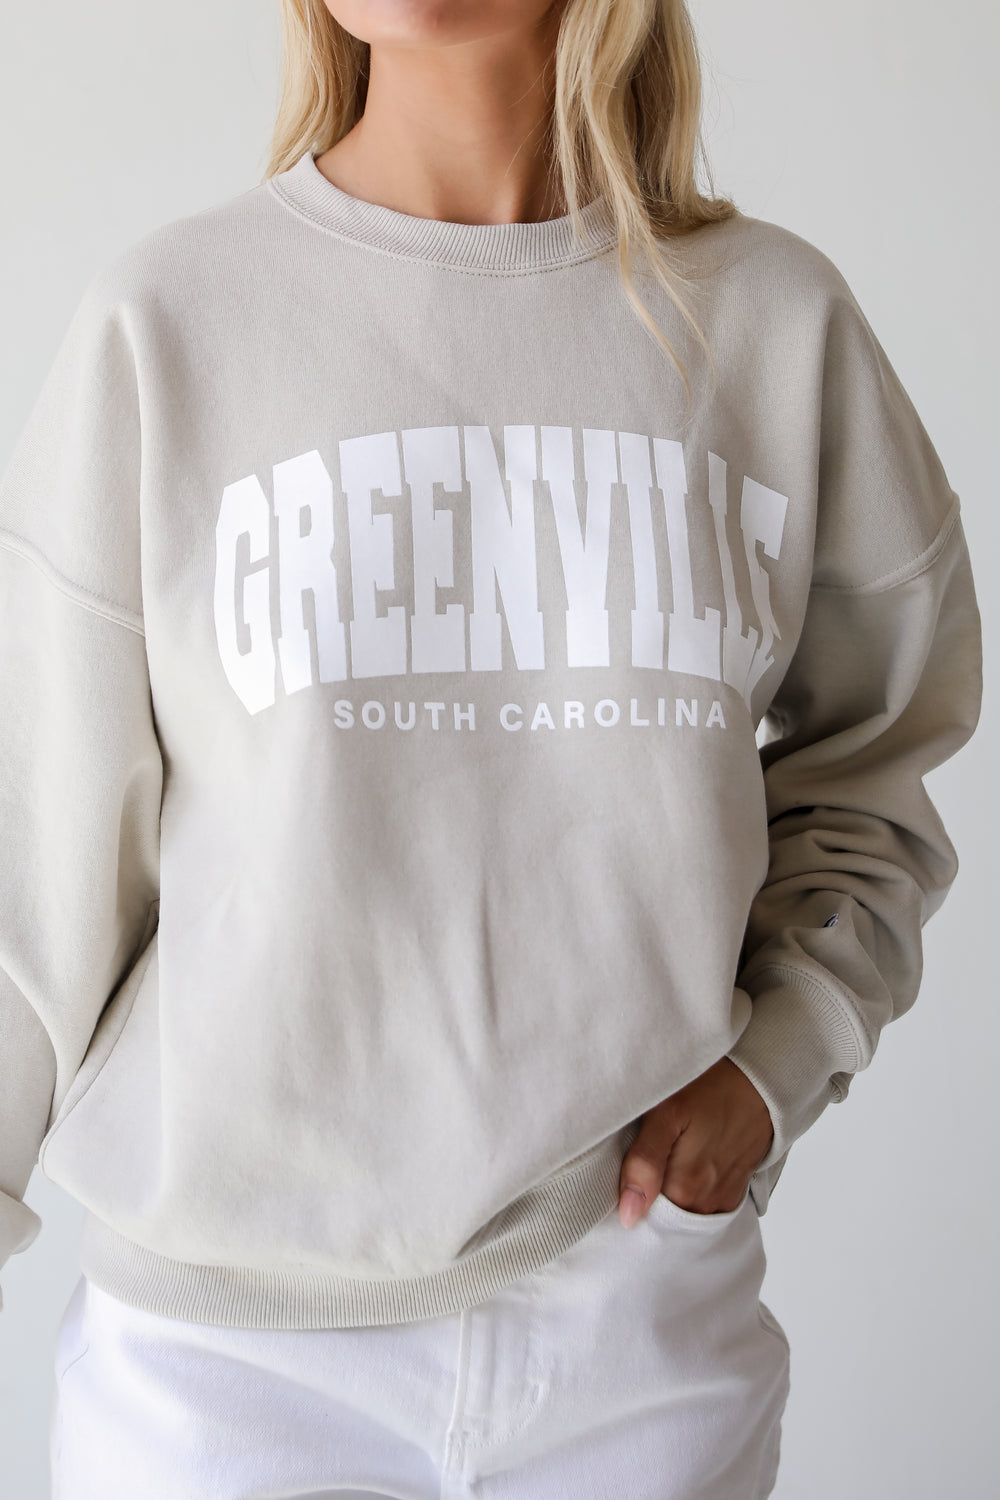 Tan Greenville South Carolina Sweatshirt